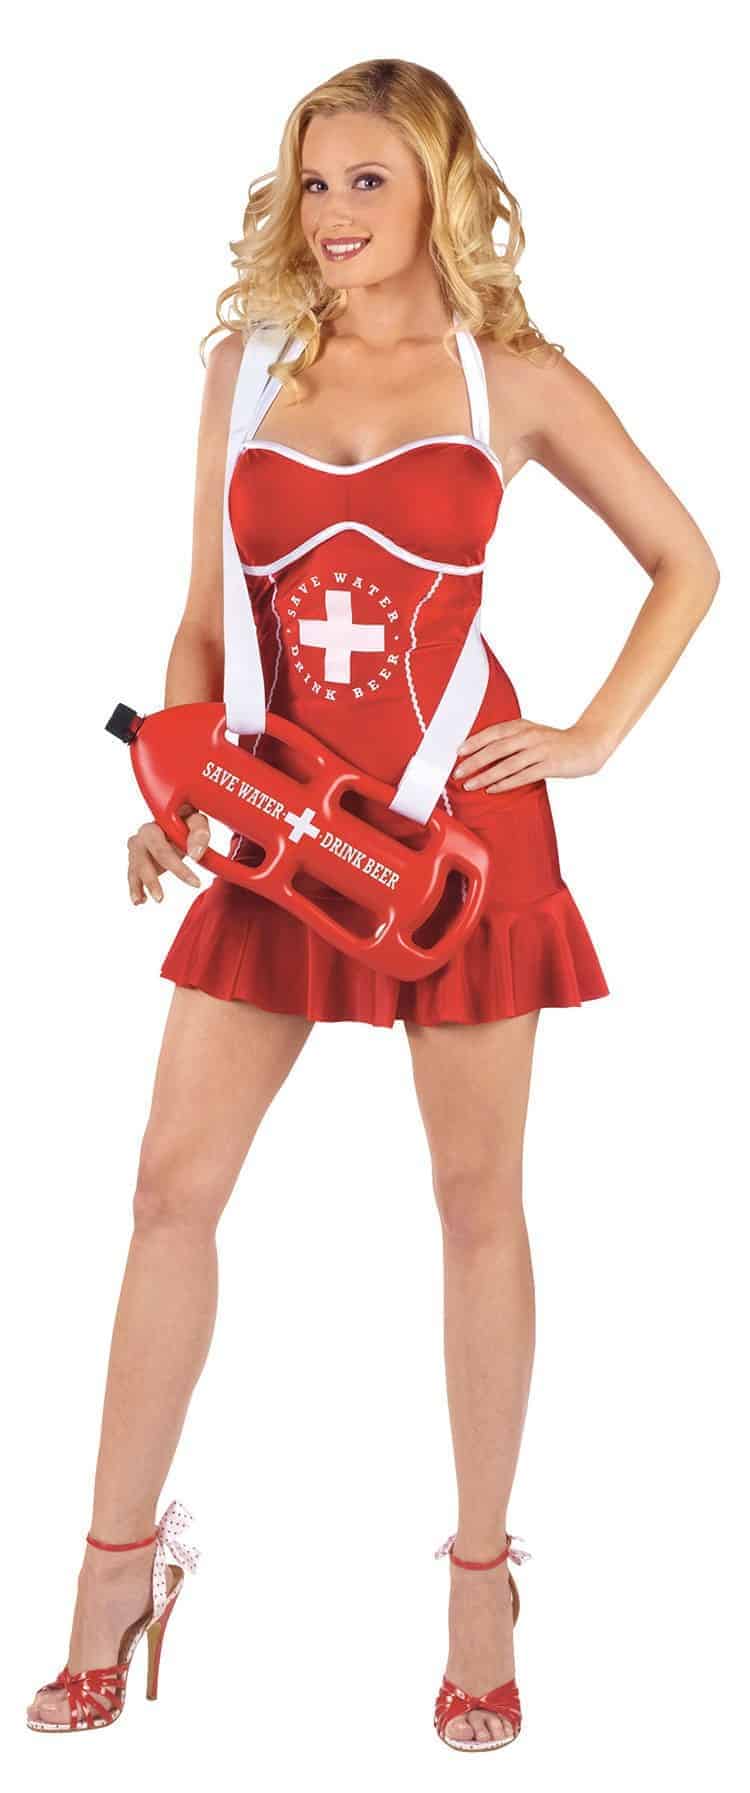 Off Duty Lifeguard Costume.